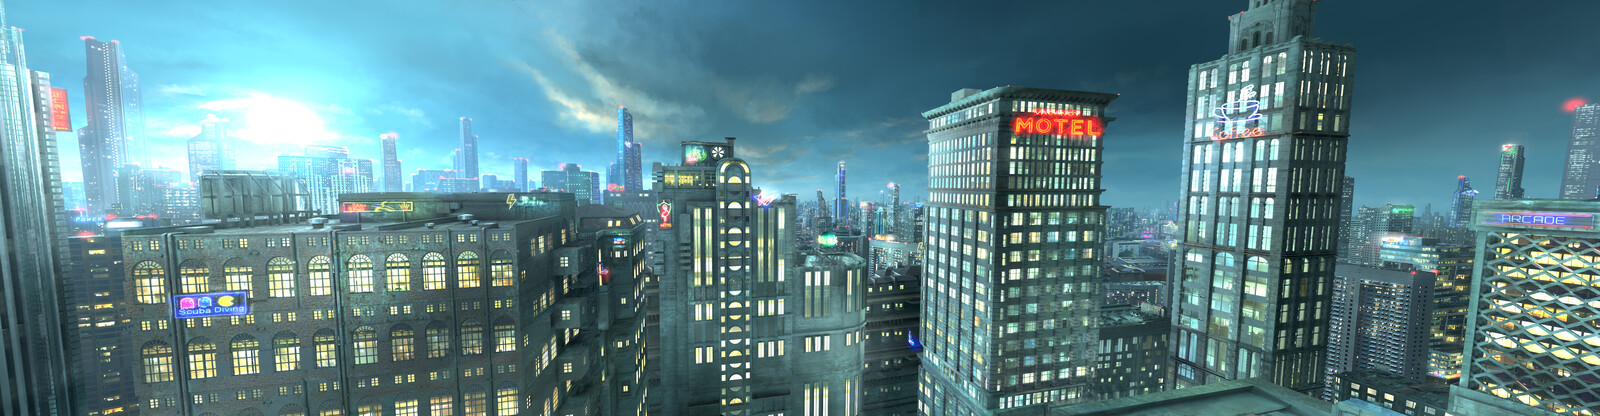 final city backdrop panorama